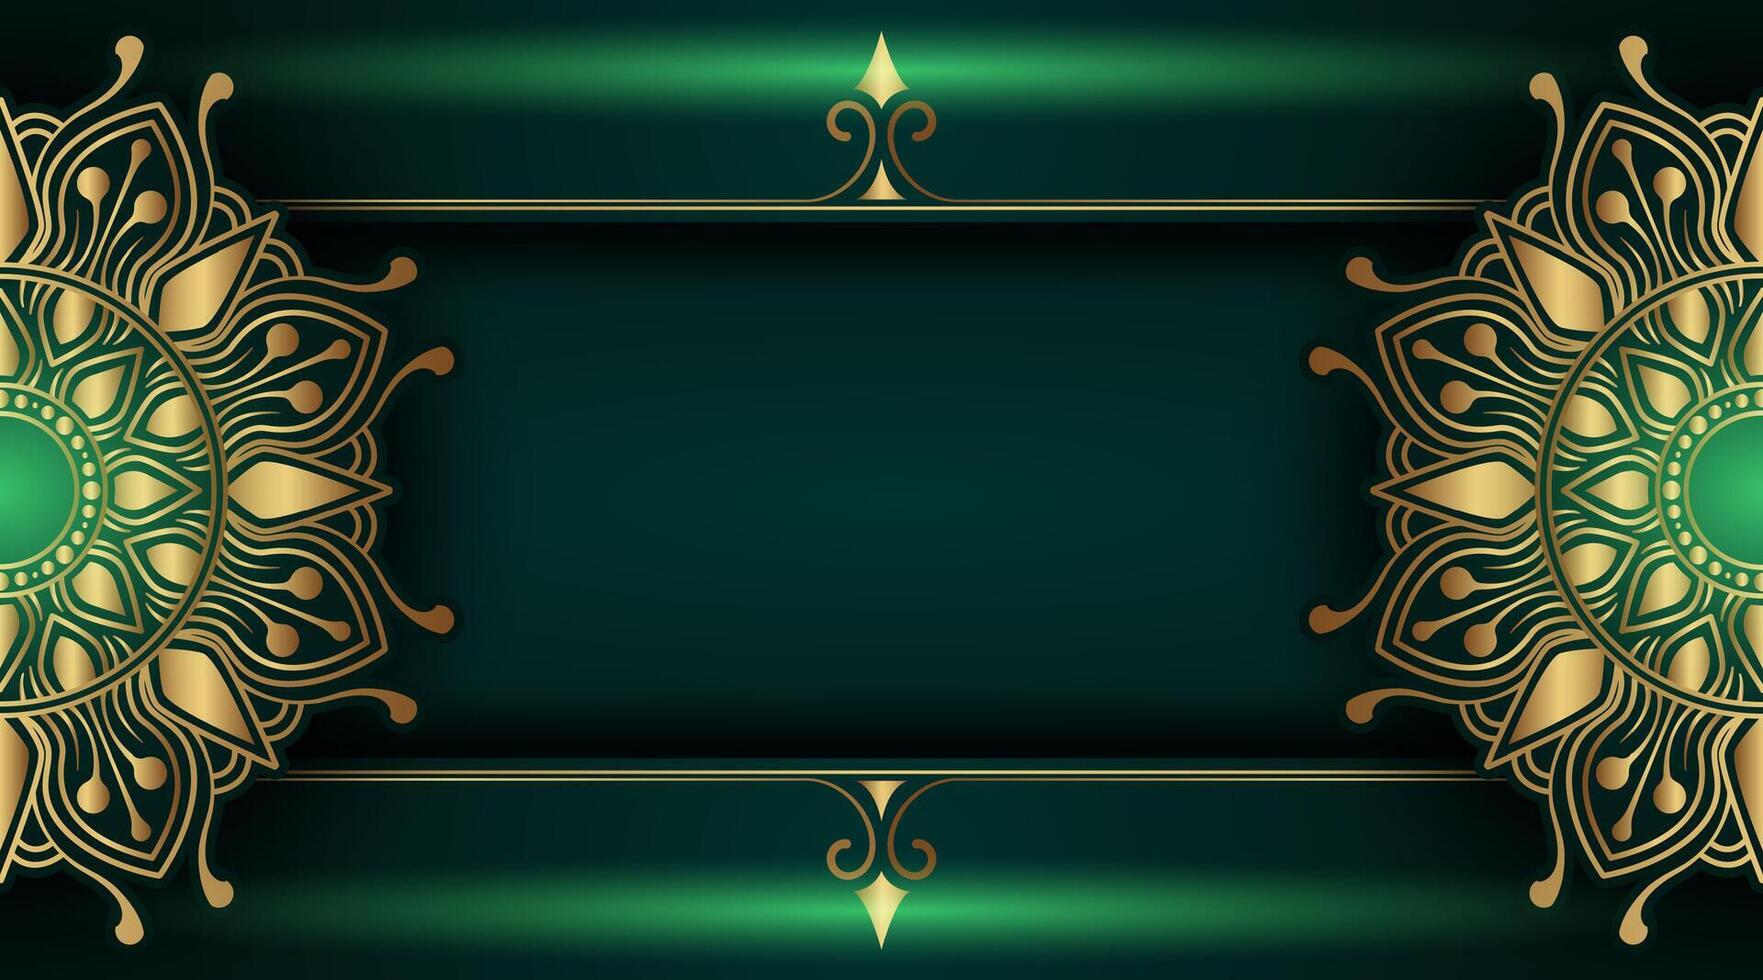 dunkel Grün Hintergrund mit Gold Mandala Ornament vektor